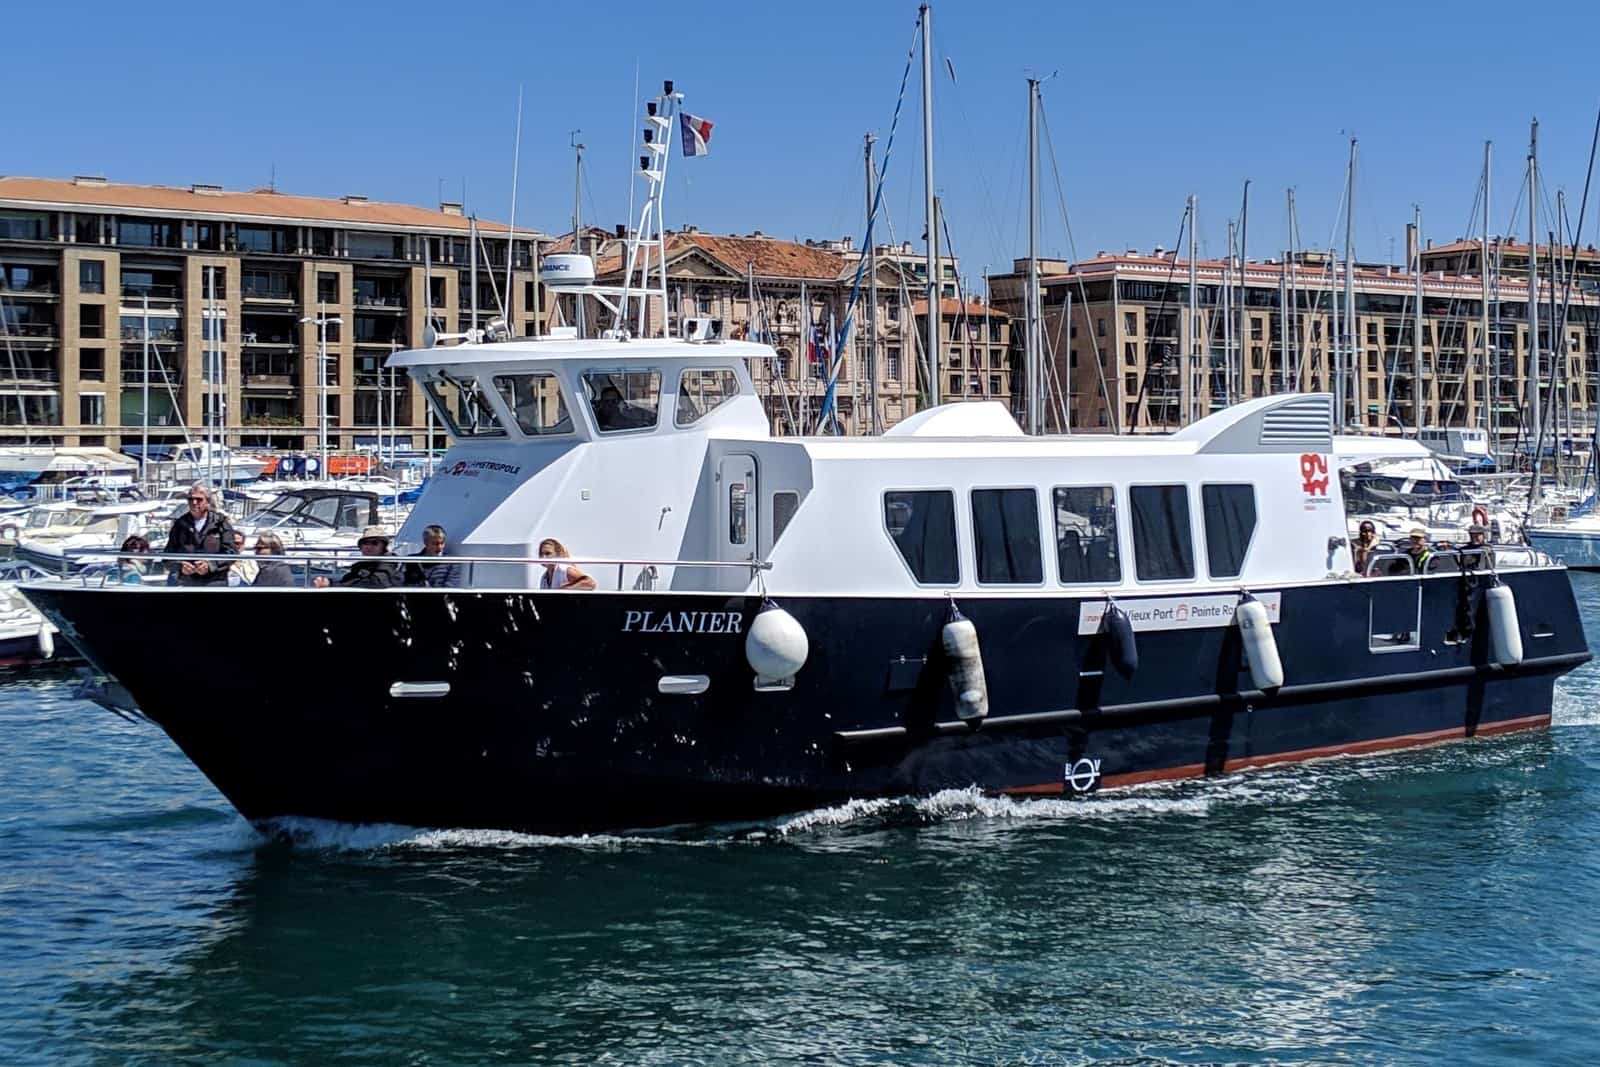 , Pointe Rouge, Estaque, Goudes, les navettes maritimes reprennent du service, Made in Marseille